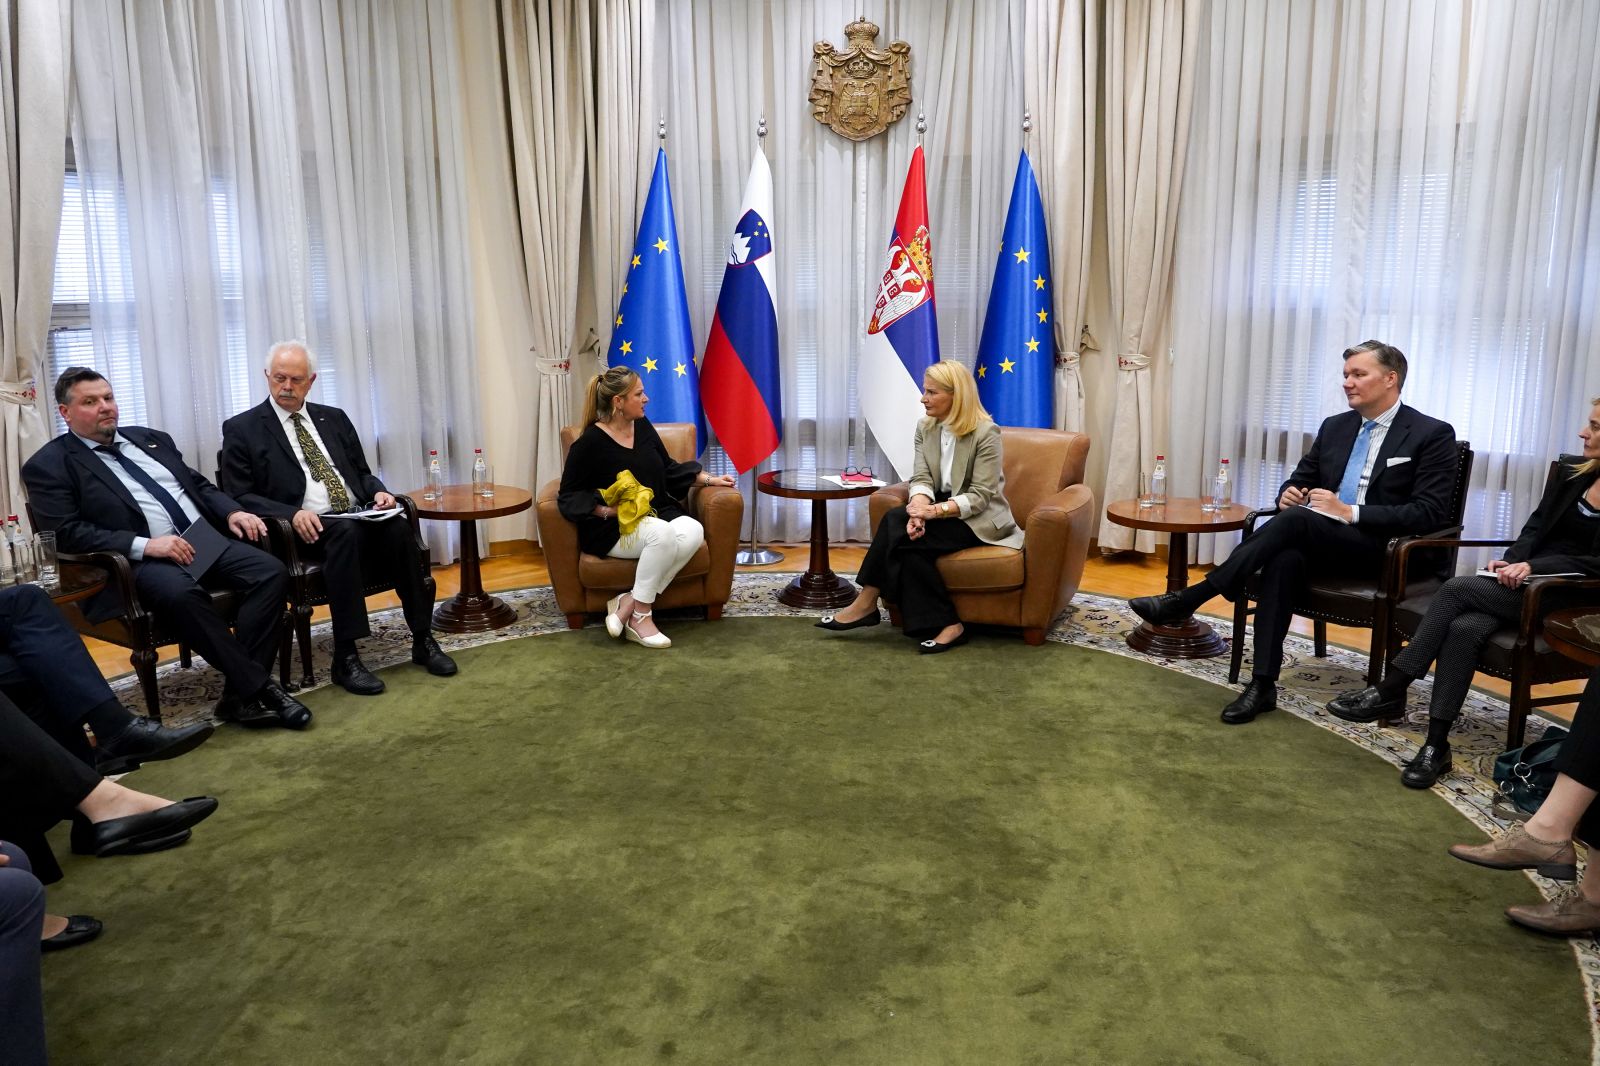 Slovenia strongly supports Serbia’s EU membership negotiations